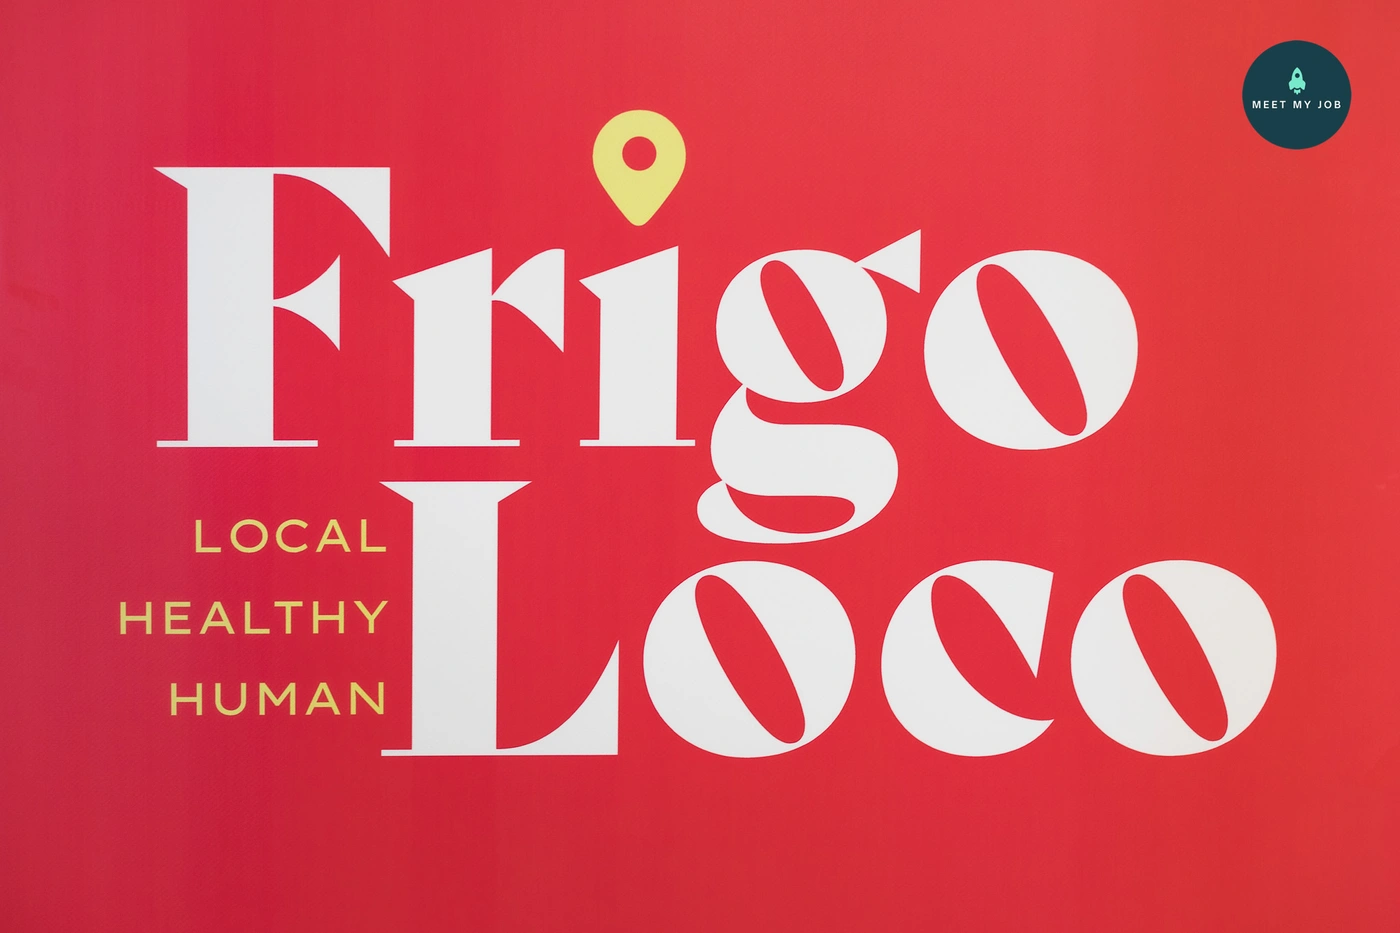 Frigo Loco - image n°2 - Meet My Job